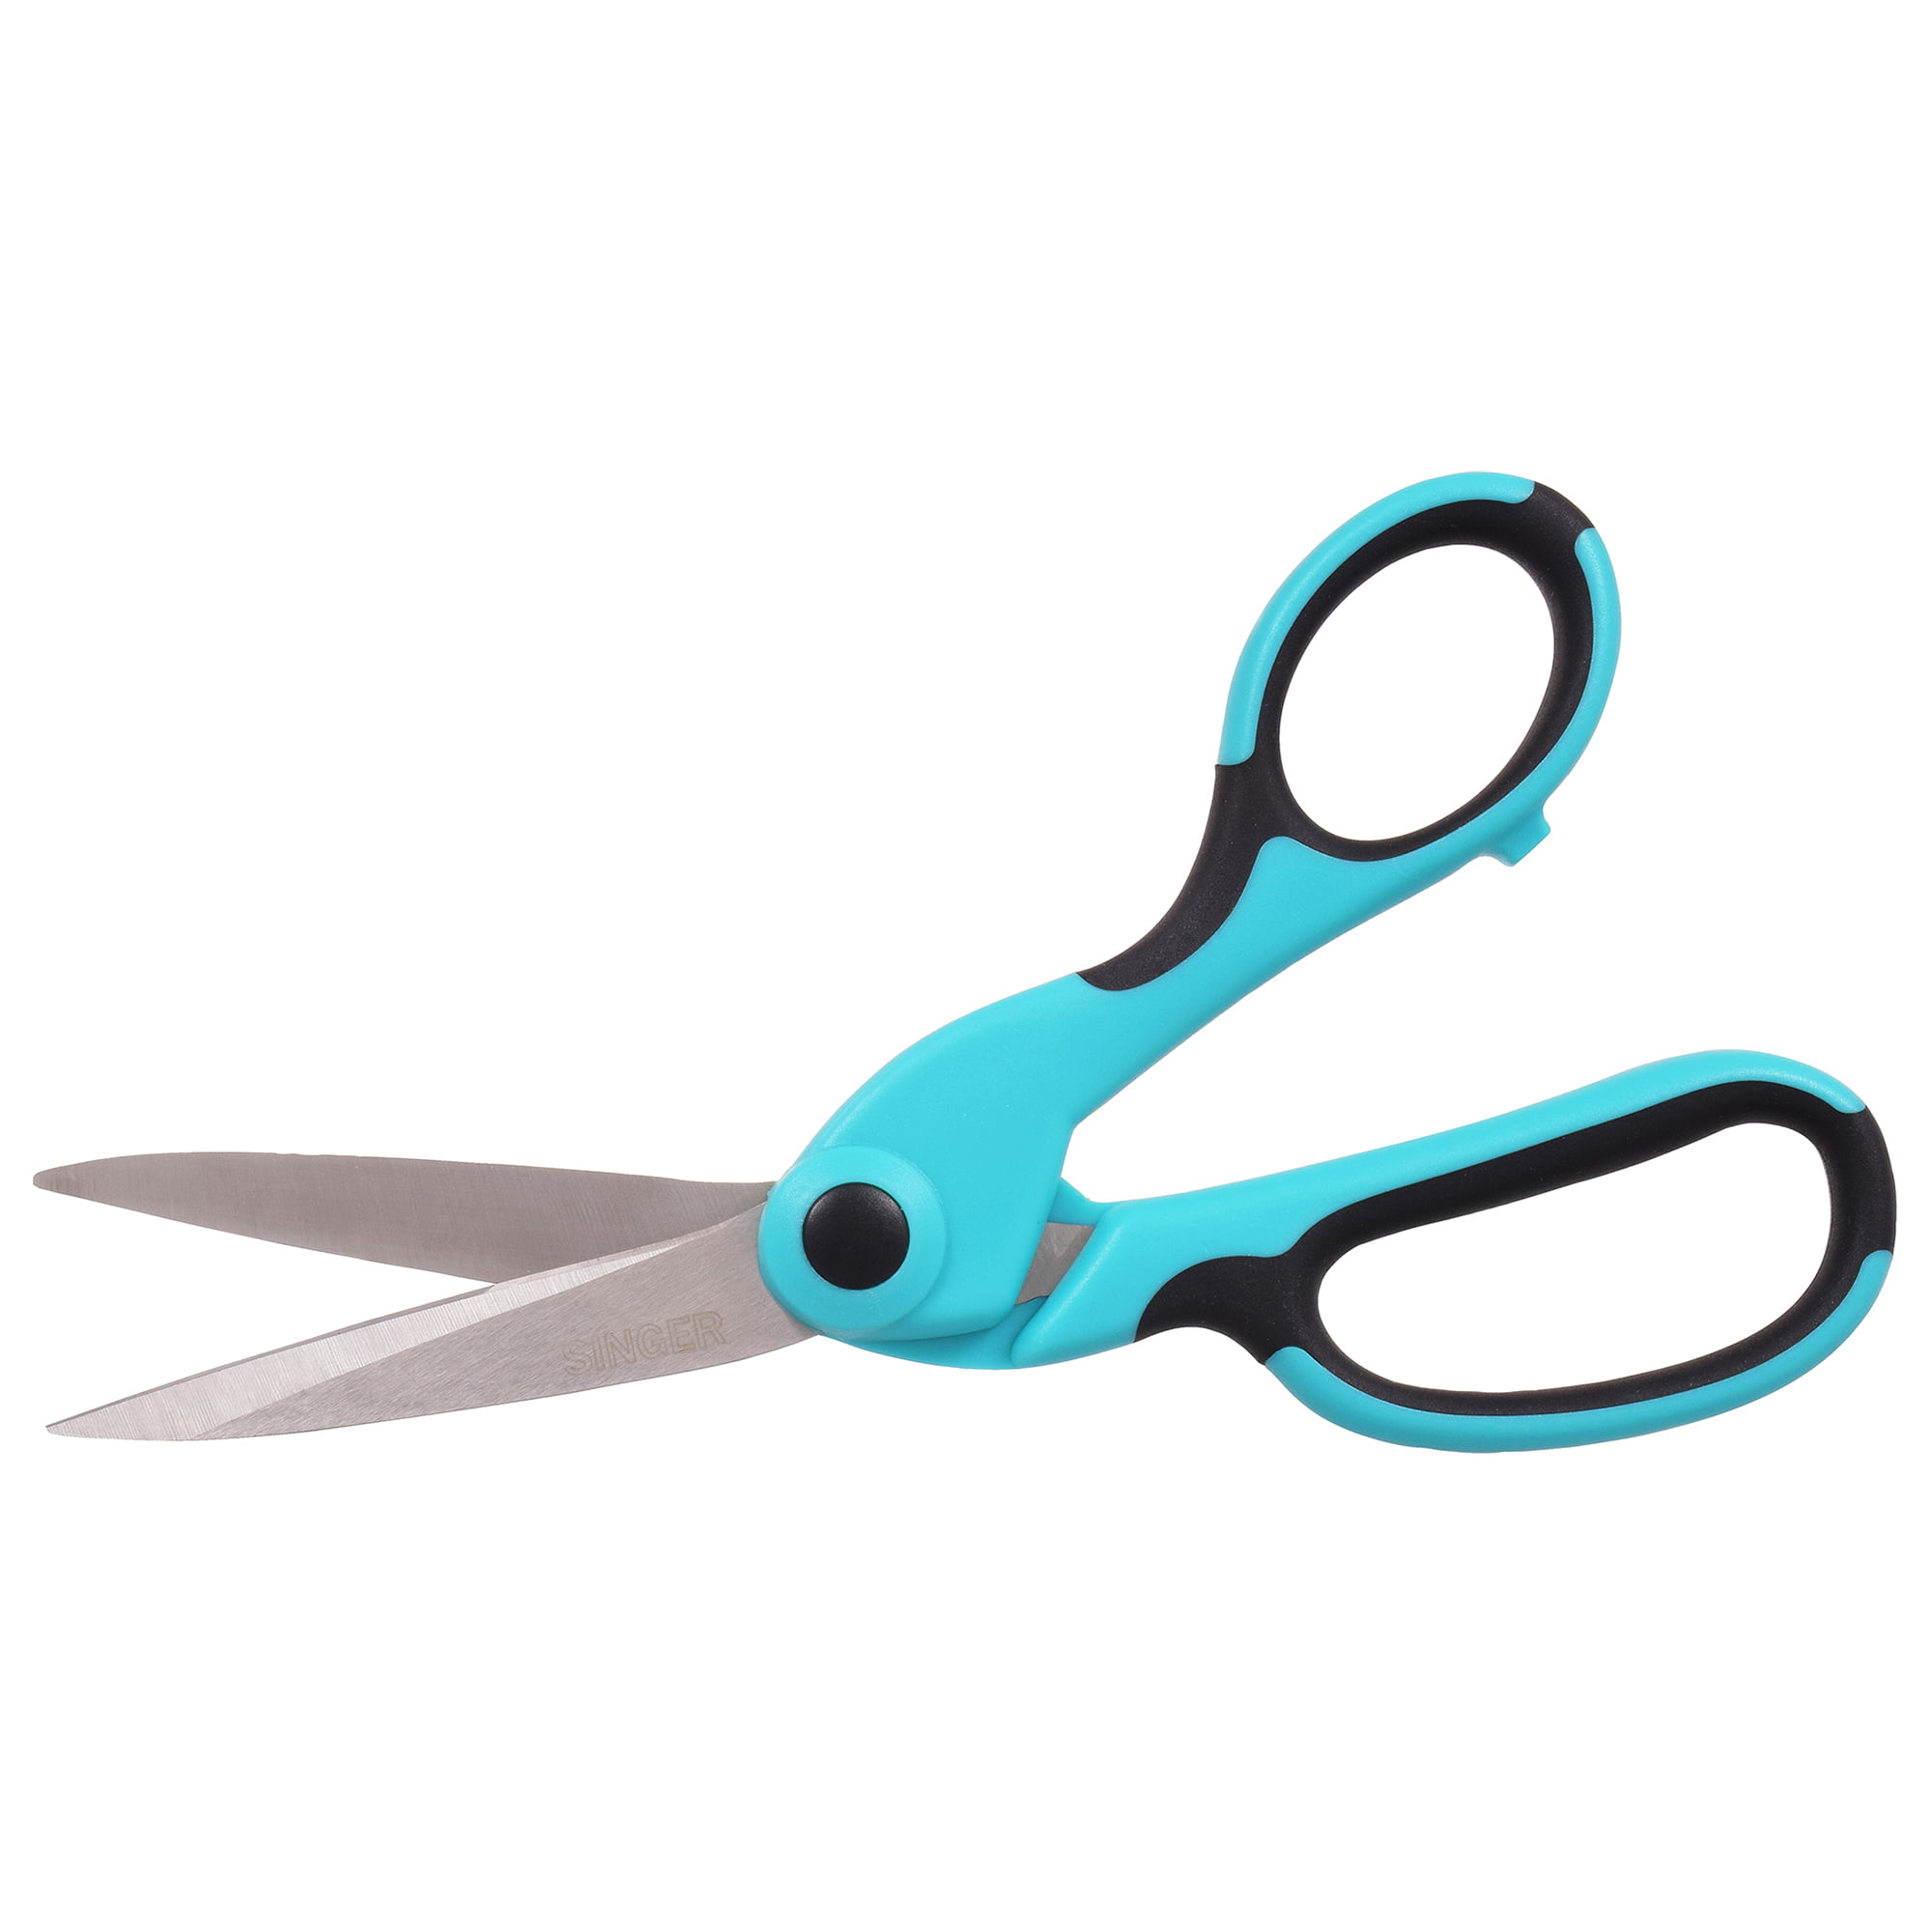  XFasten Sewing Scissors for Fabric Cutting Blue 9.5 Inch  Premium Professional Fabric Scissors Sewing